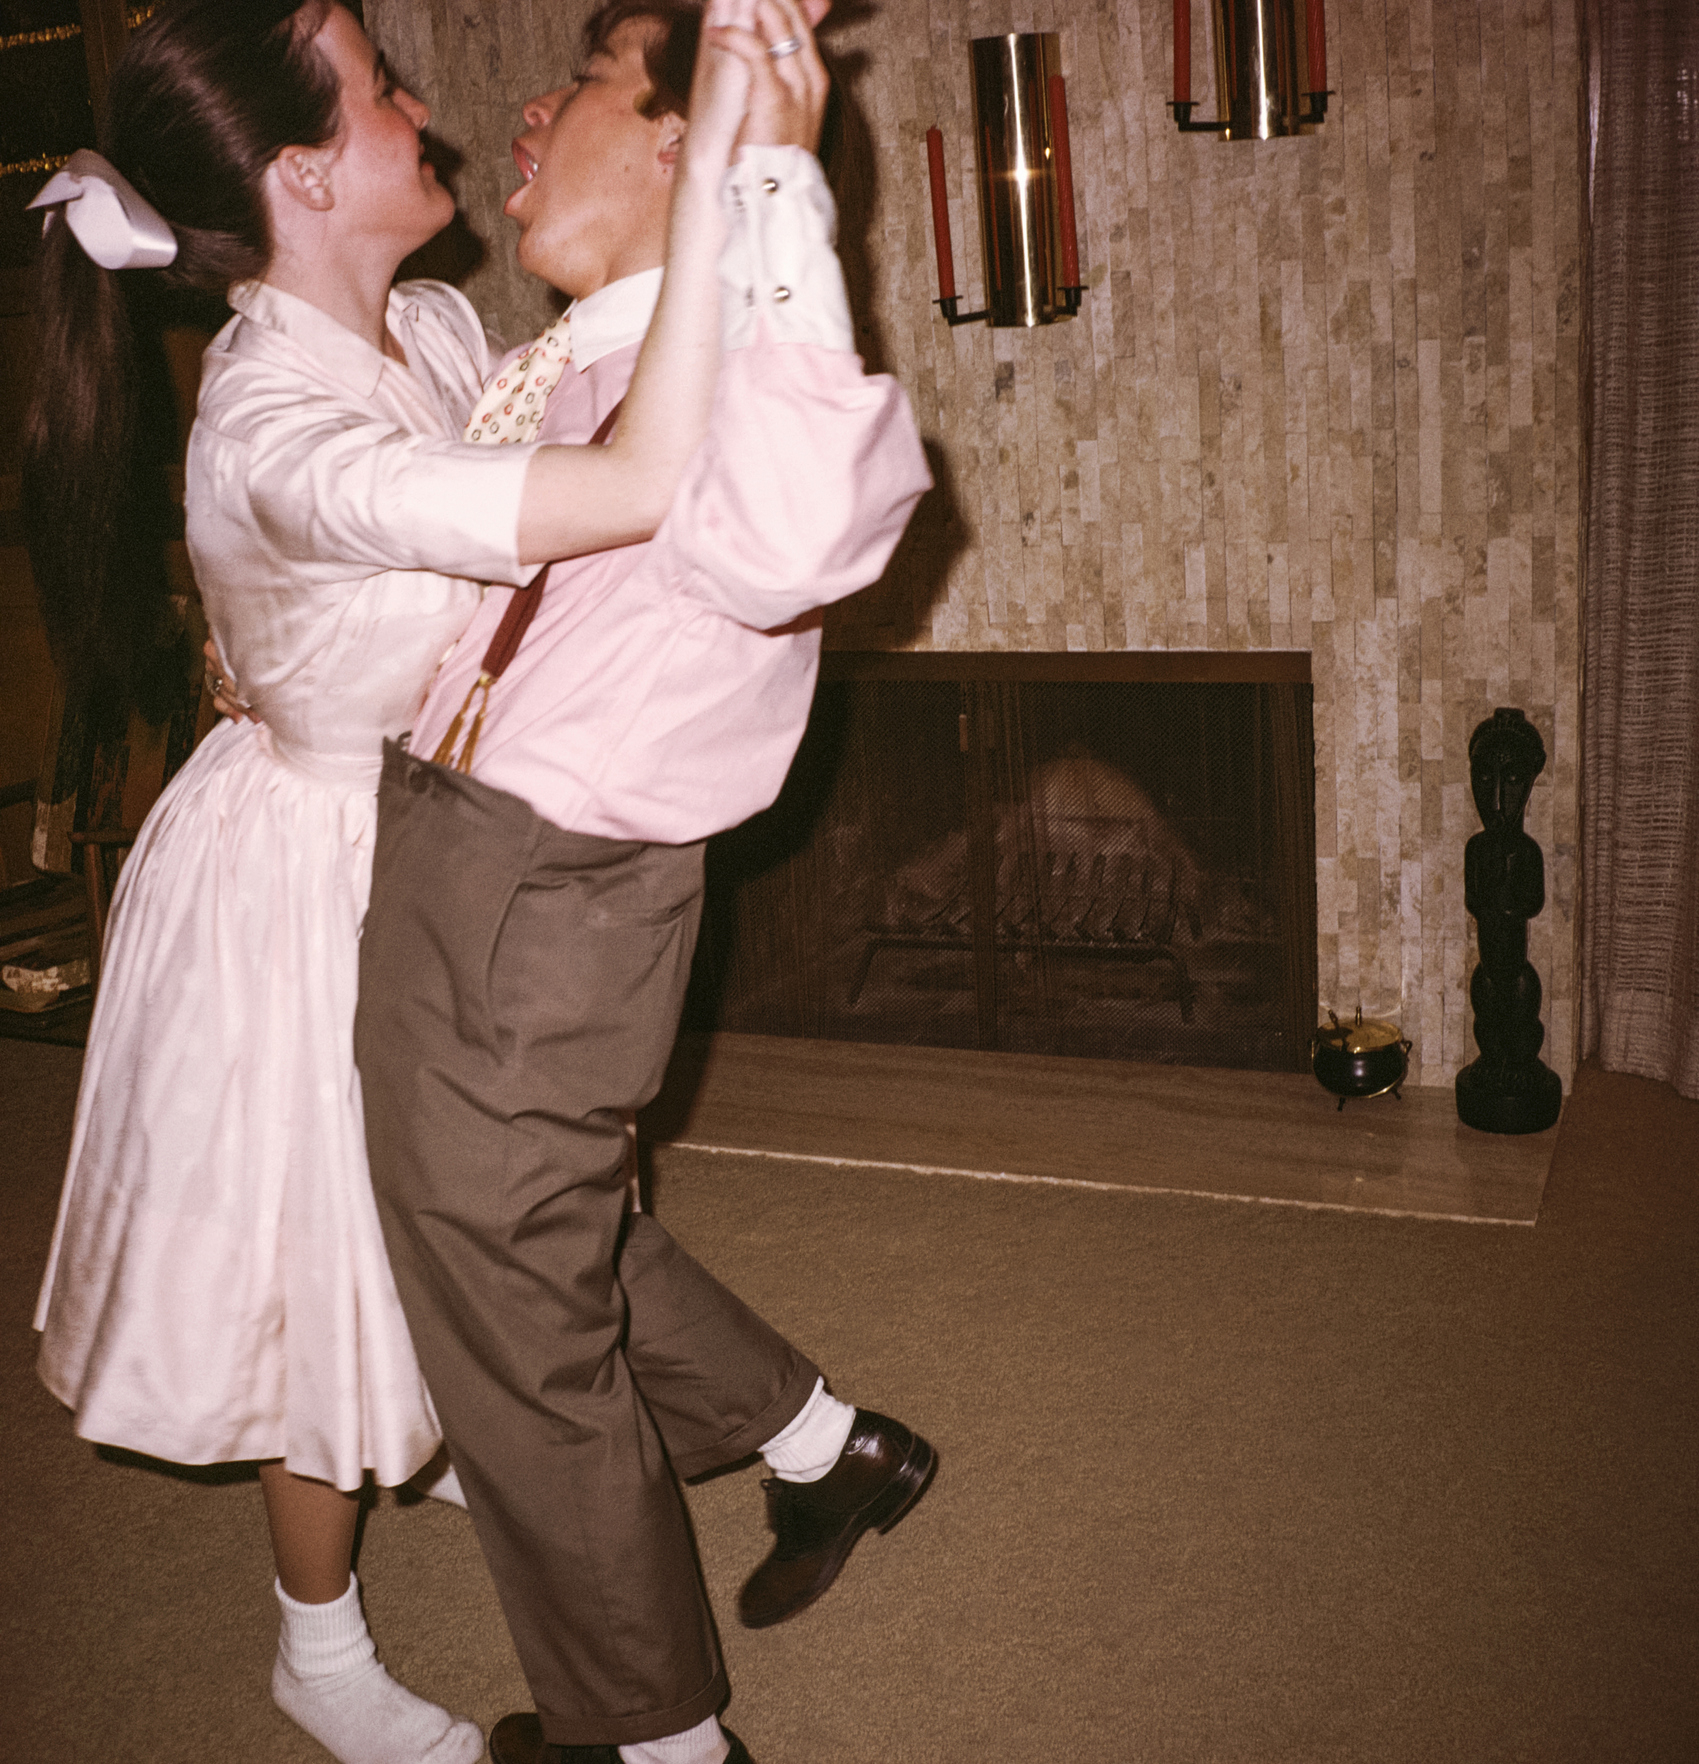 Two people joyfully dancing in a vintage-style living room